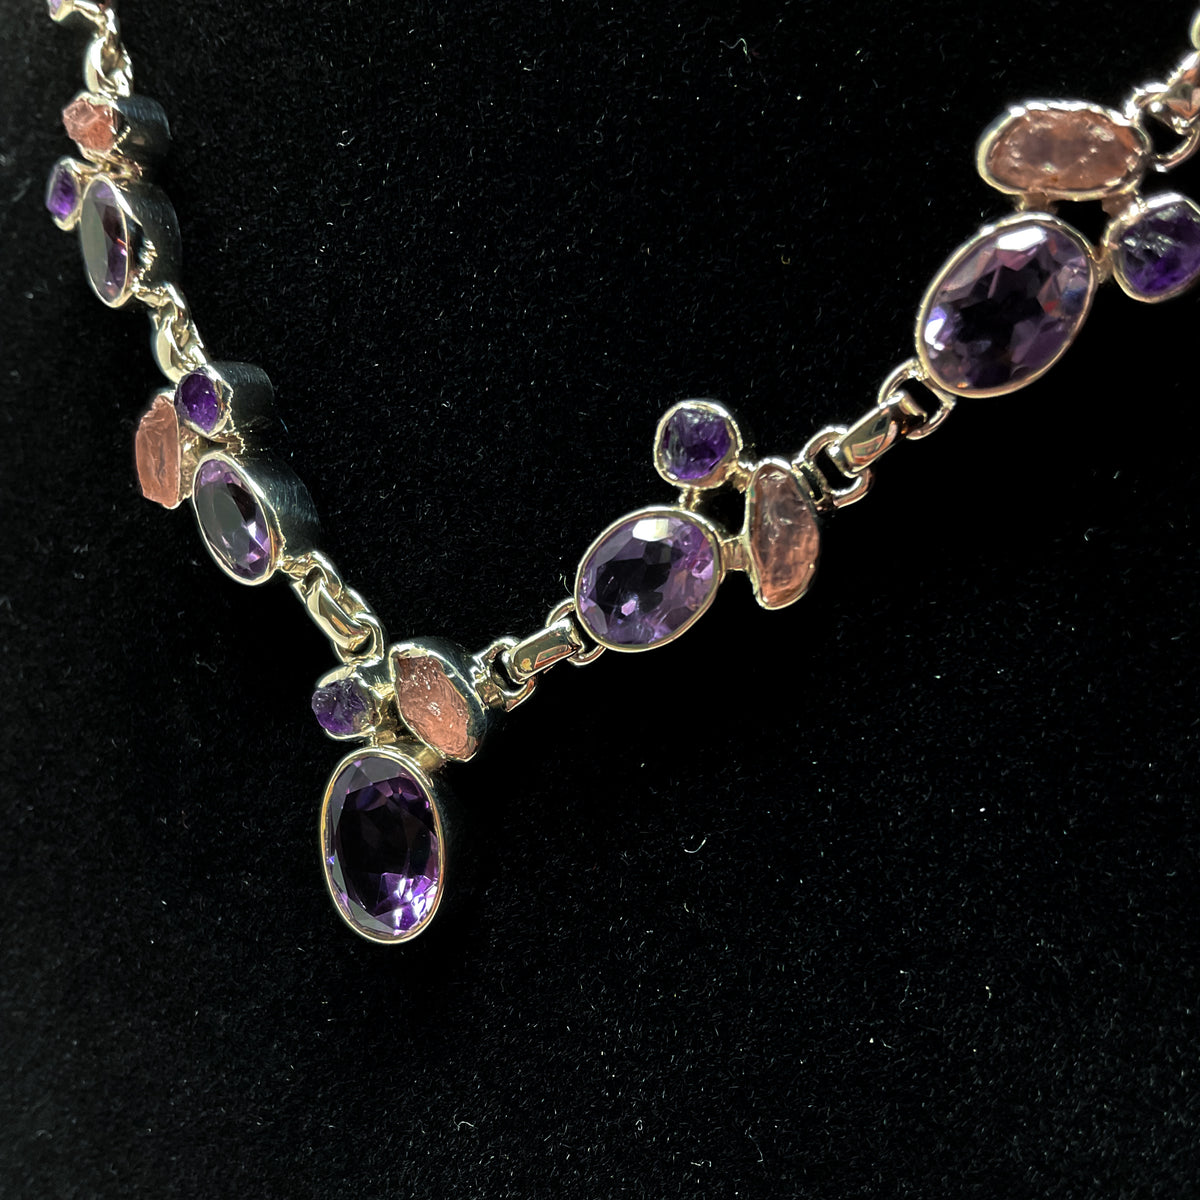 Chanel purple amethyst with rose quartz necklace 2012